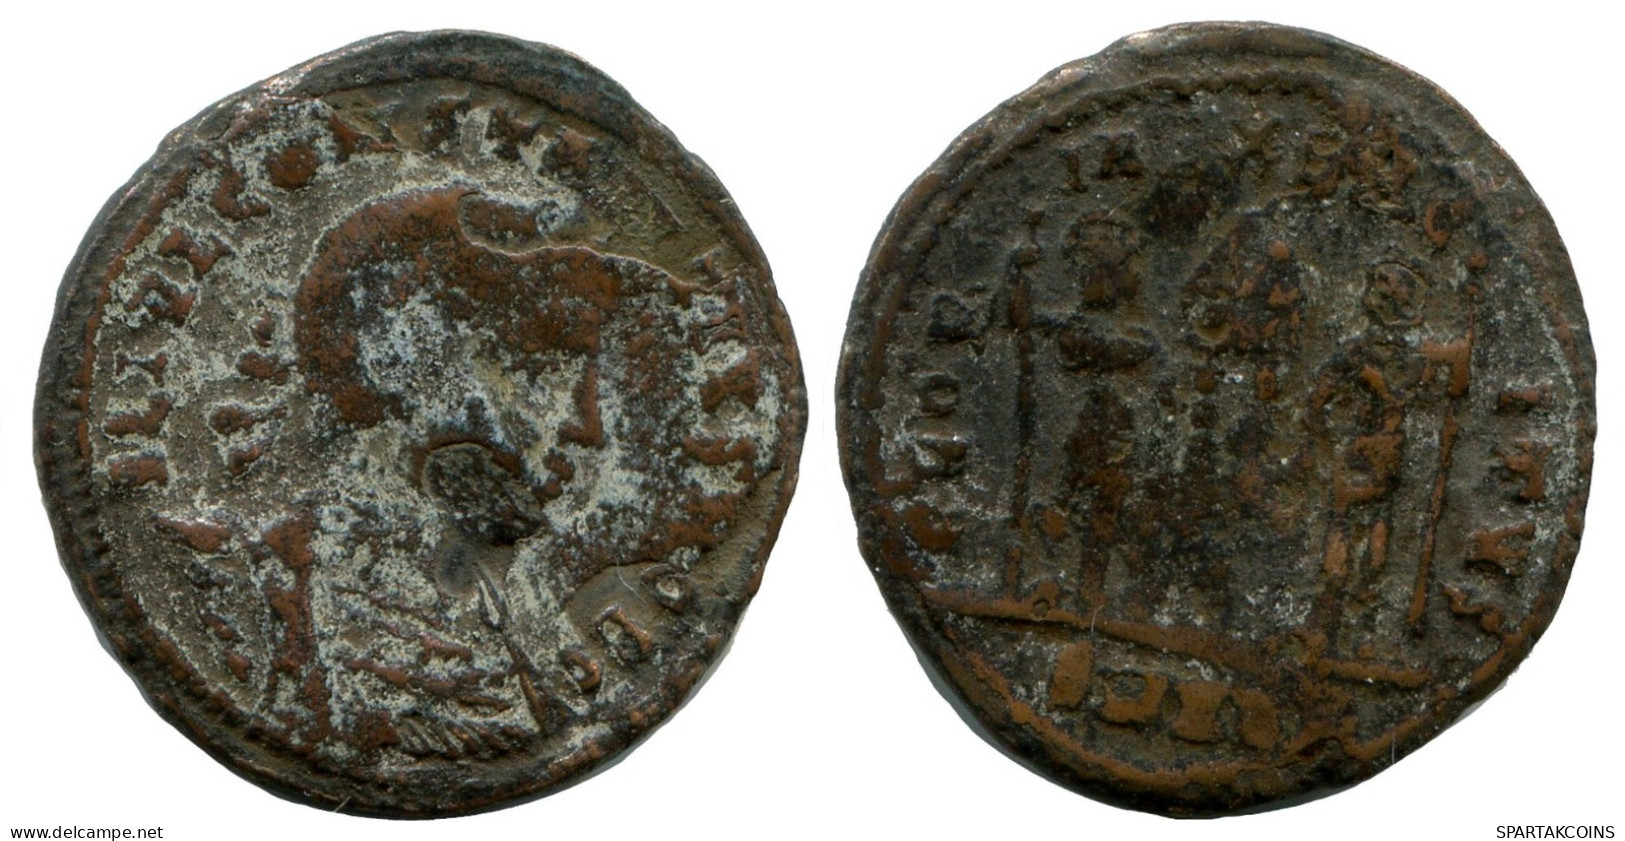 CONSTANTIUS II MINTED IN ALEKSANDRIA FOUND IN IHNASYAH HOARD #ANC10481.14.D.A - El Impero Christiano (307 / 363)